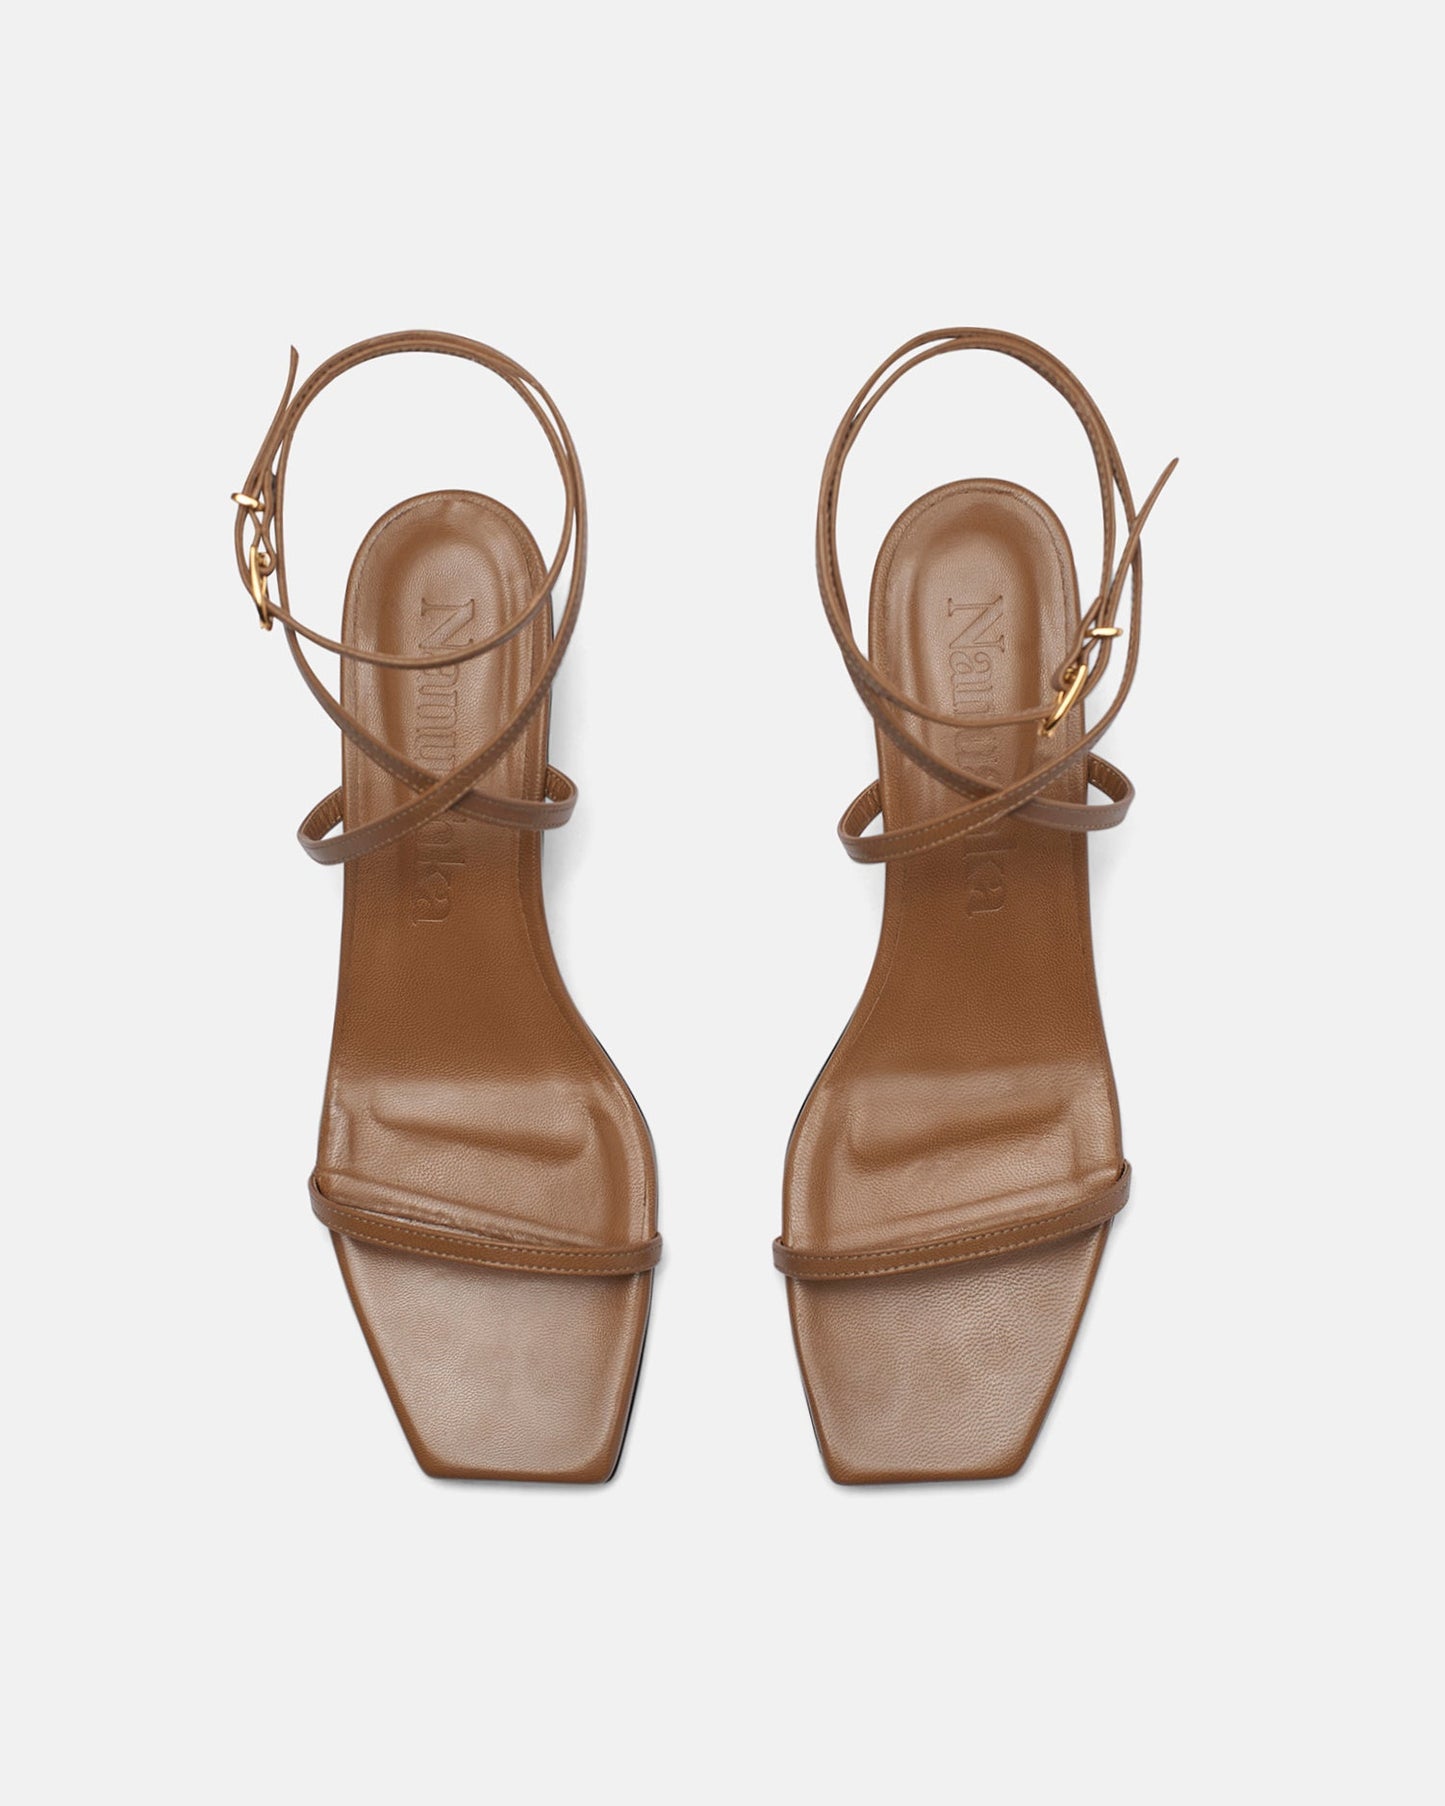 Jol - Leather Sandals - Nut Brown